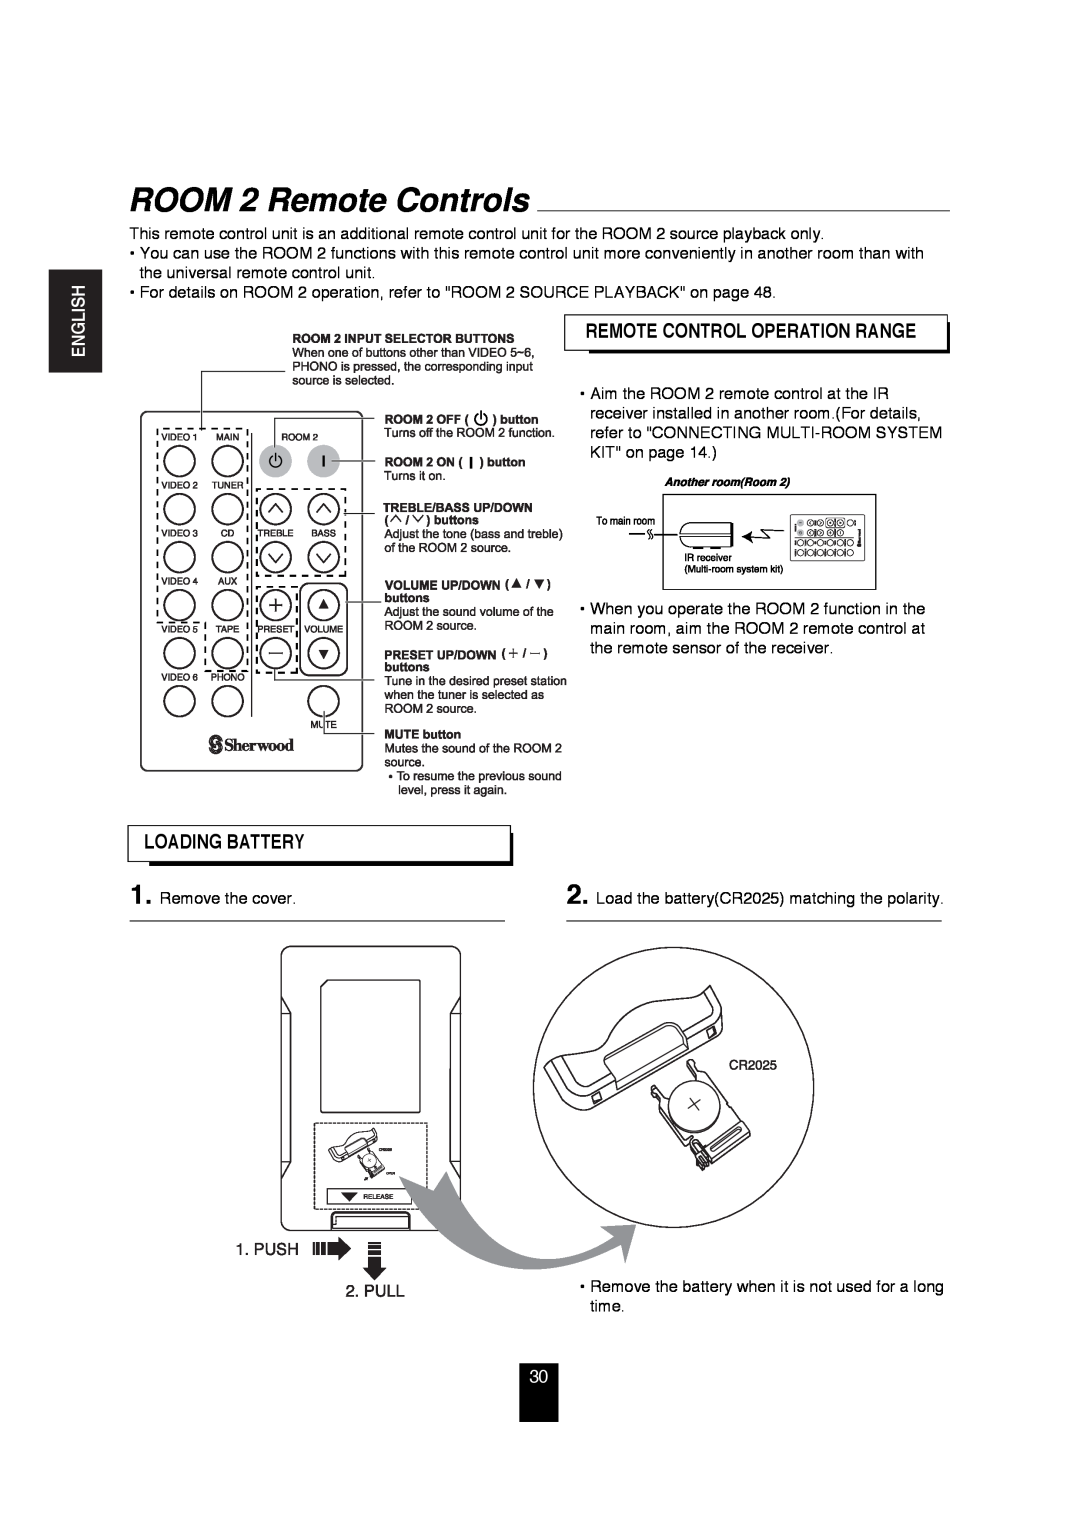 Sherwood R-872 manual ROOM 2 Remote Controls, Remote Control Operation Range, Loading Battery, English 